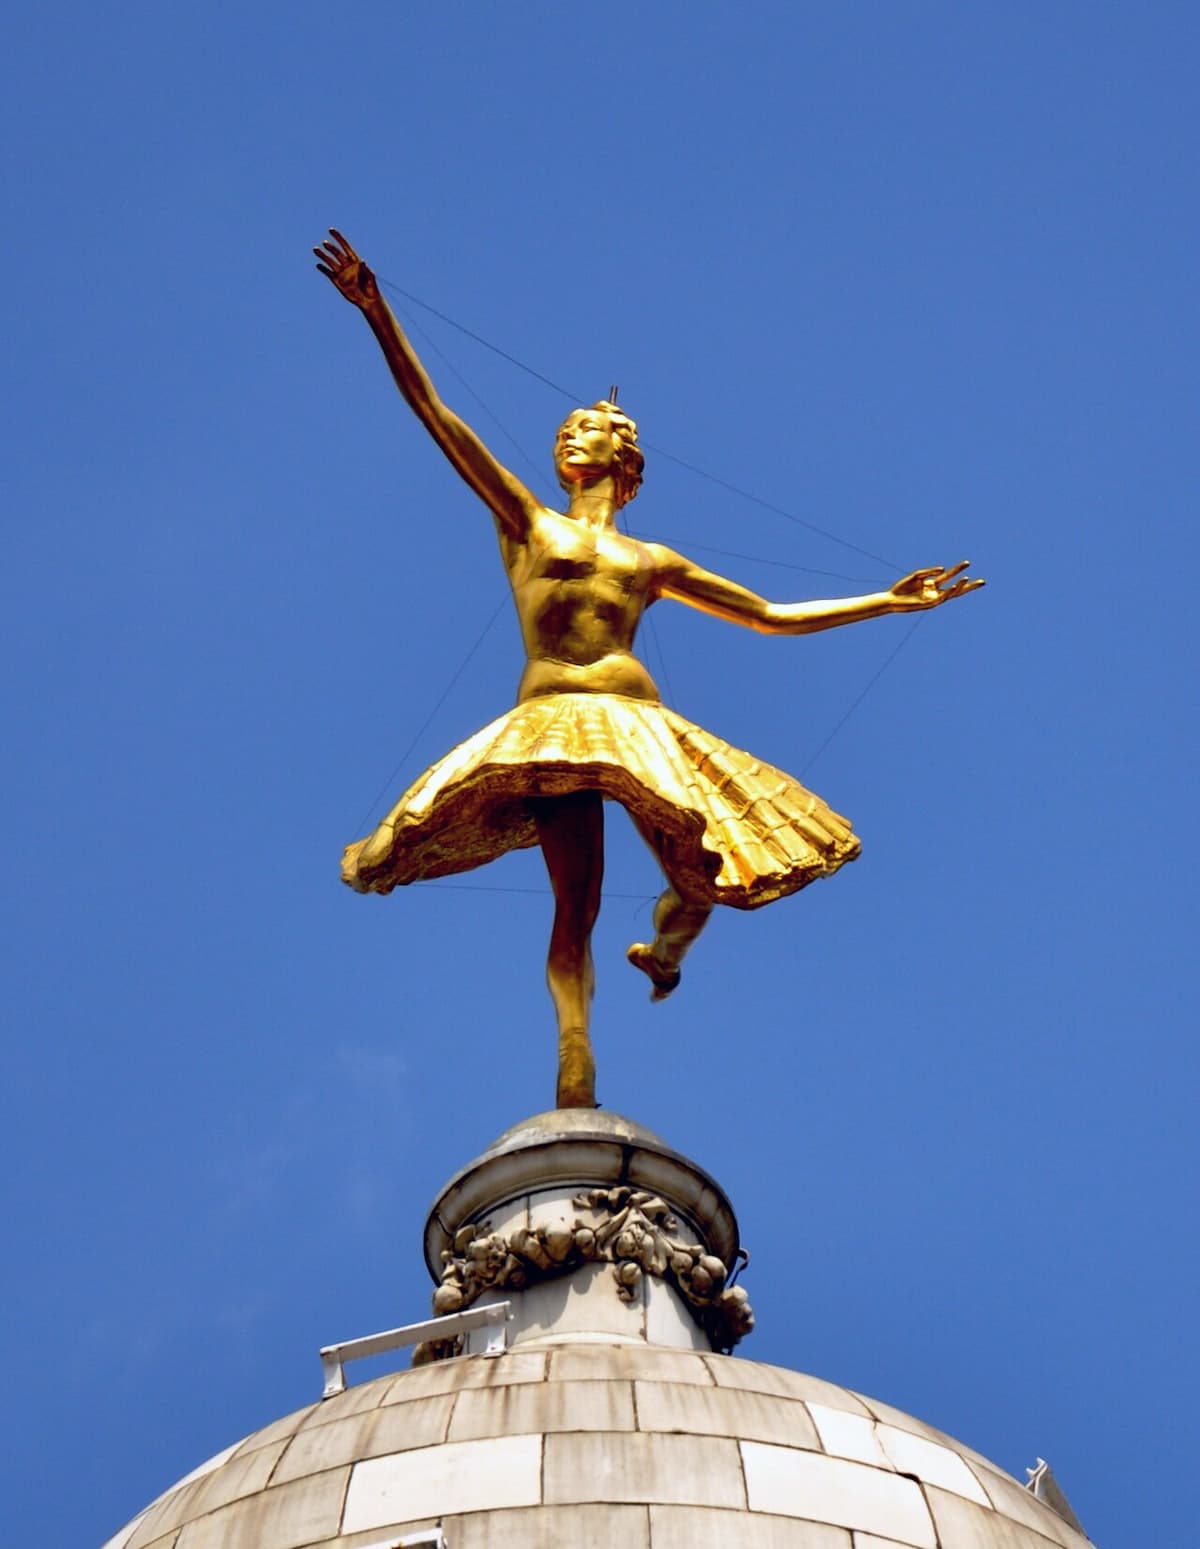 London, Victoria Palace Theatre, rooftop statue of Anna Pavlova